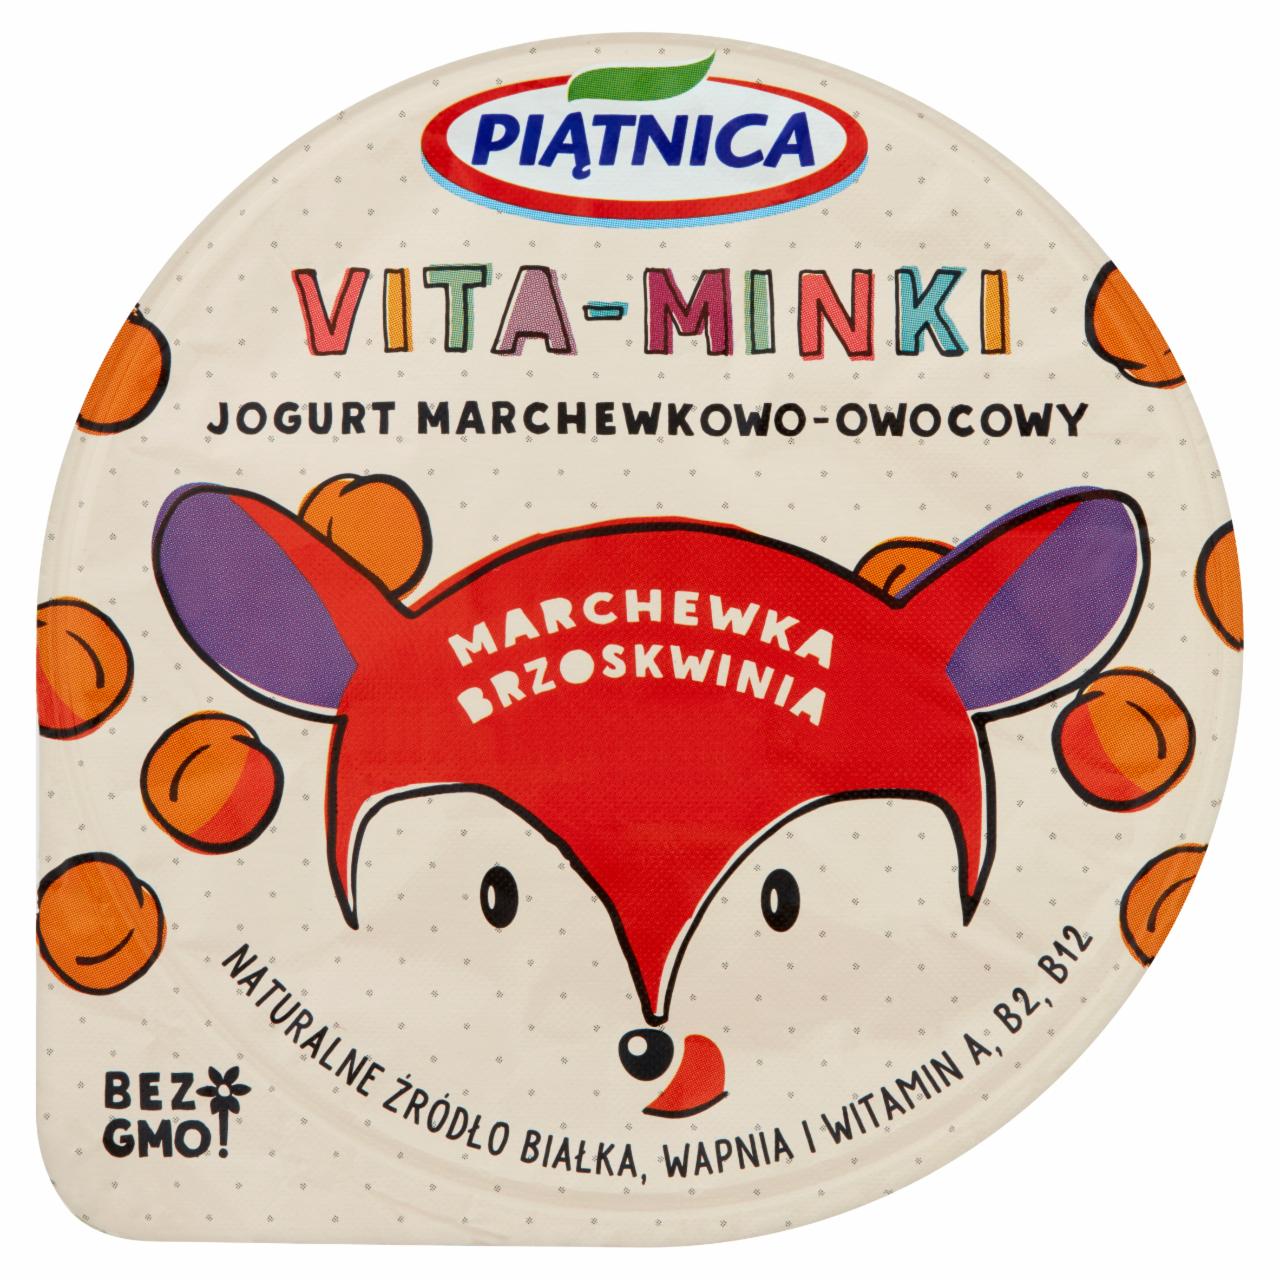 Zdjęcia - Piątnica Vita-Minki Jogurt marchewka brzoskwinia 125 g